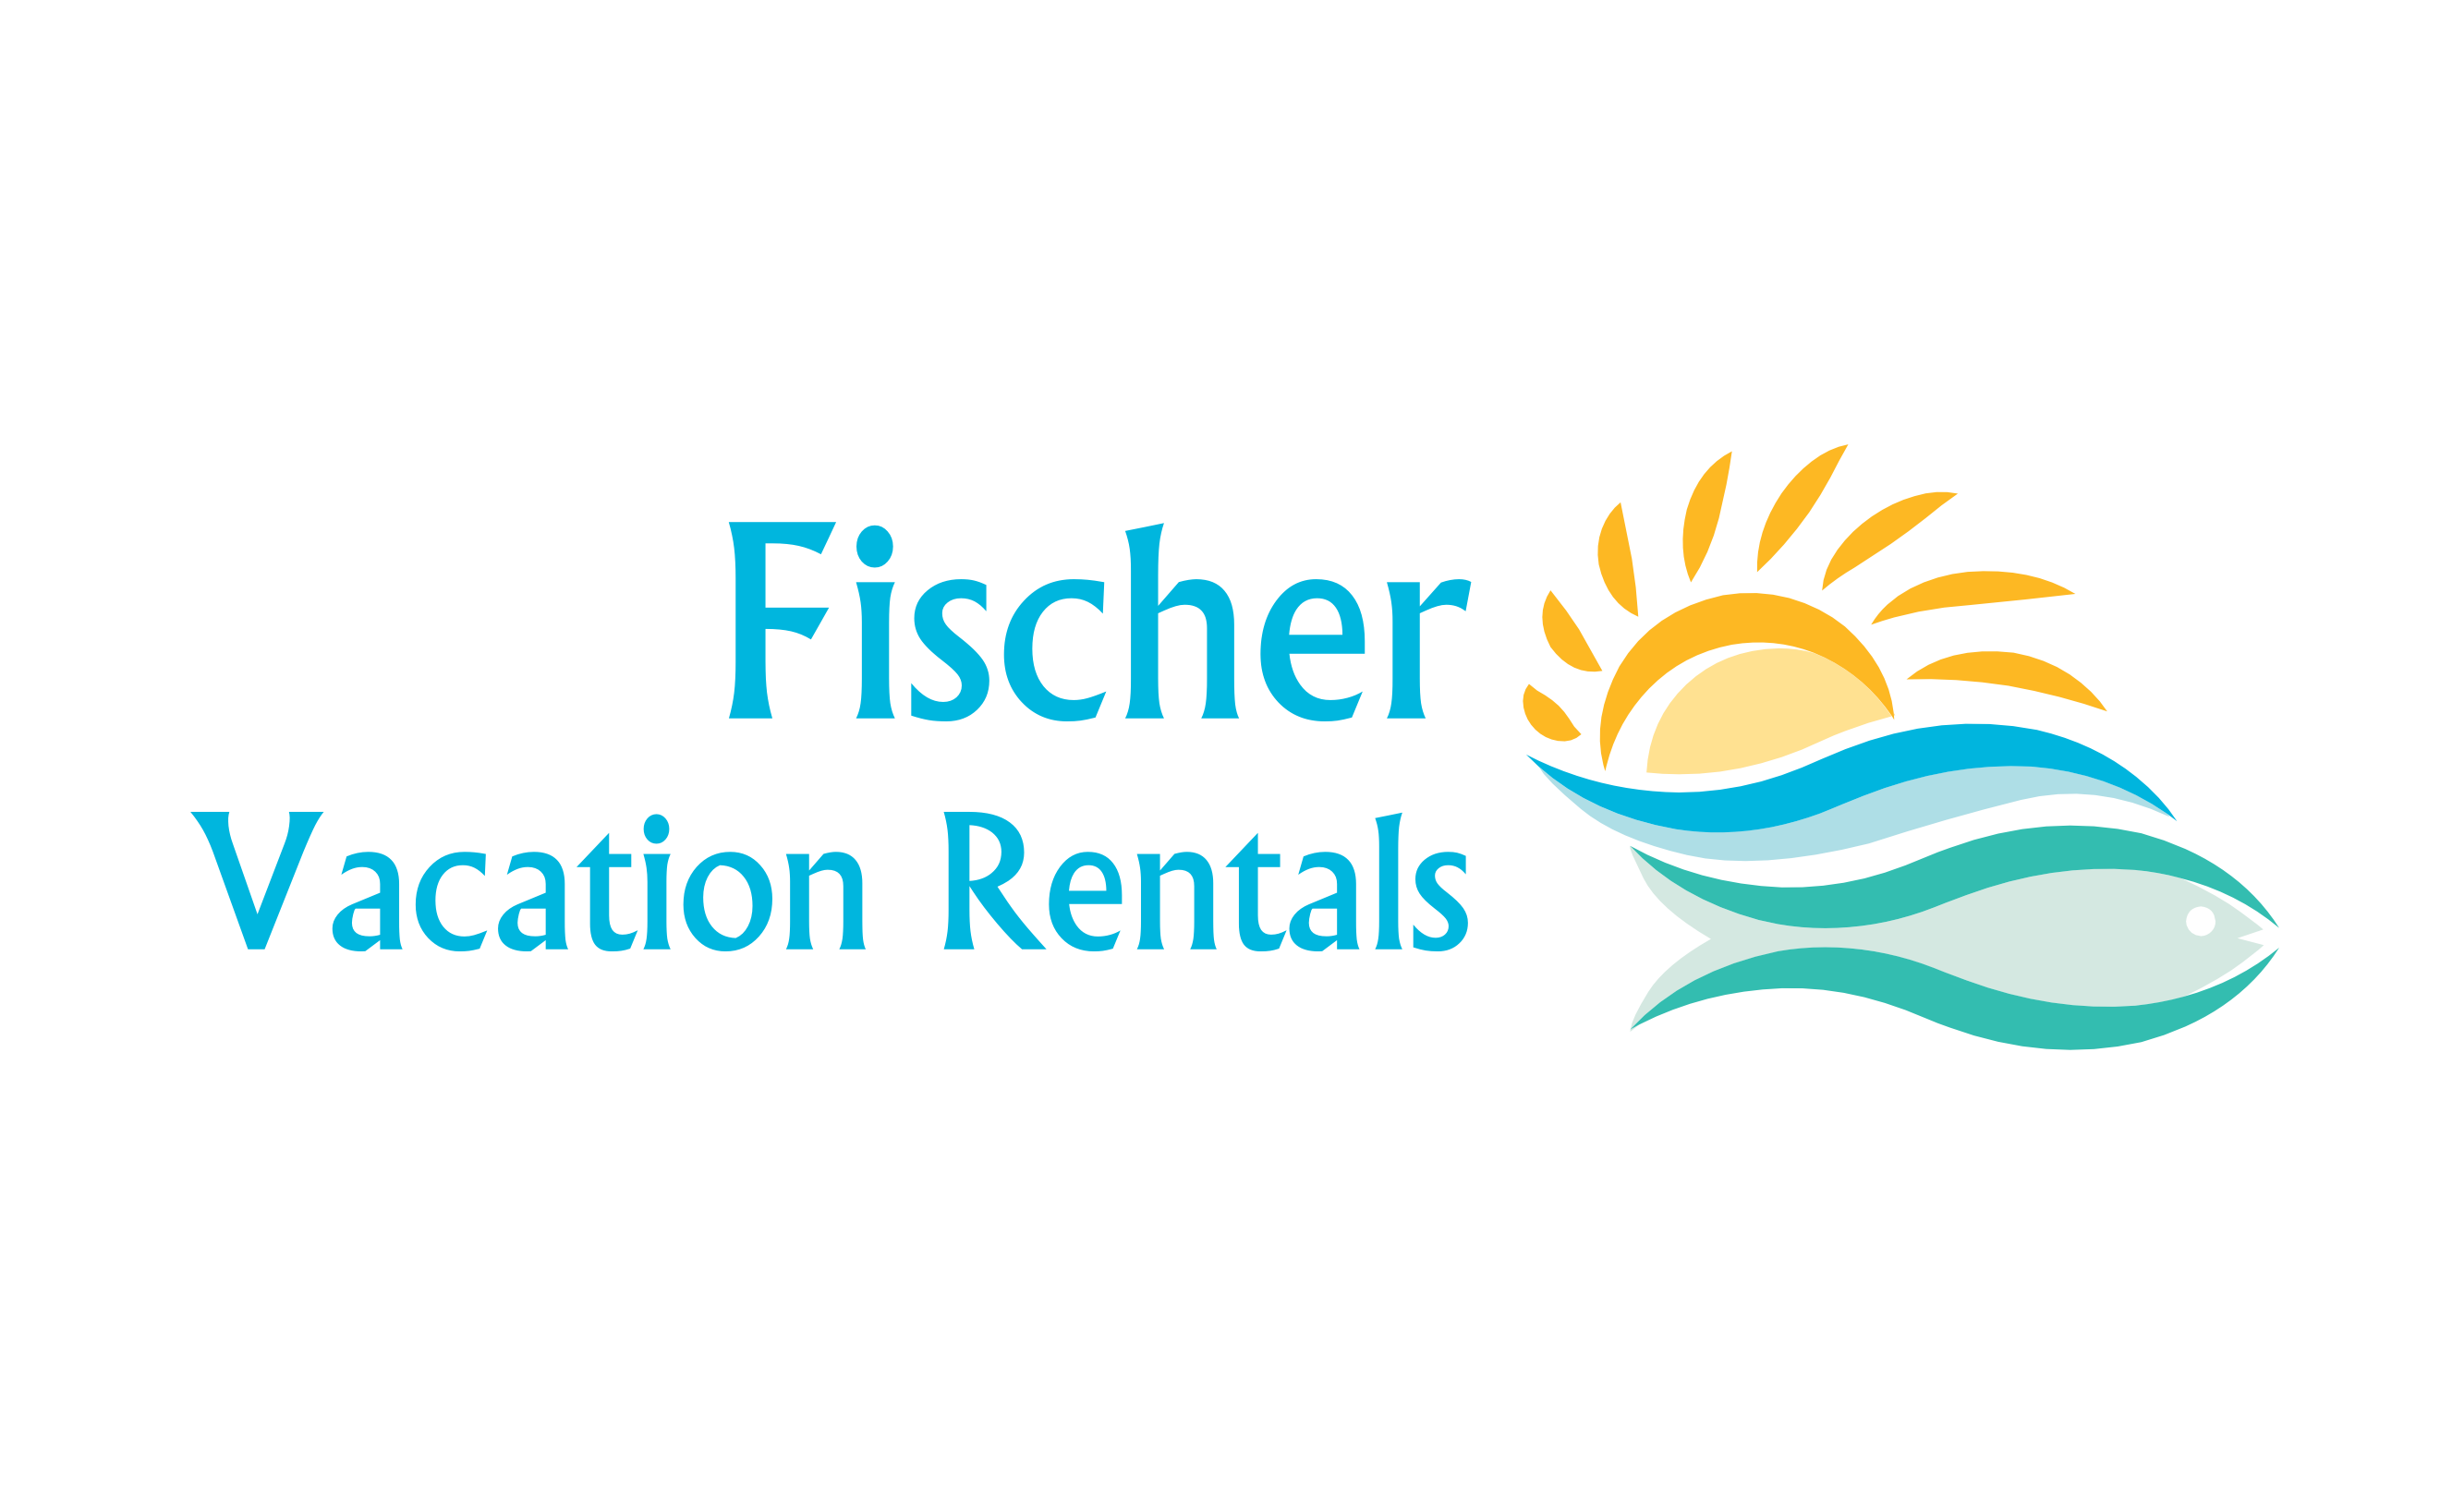 Fischer Vacation Rentals